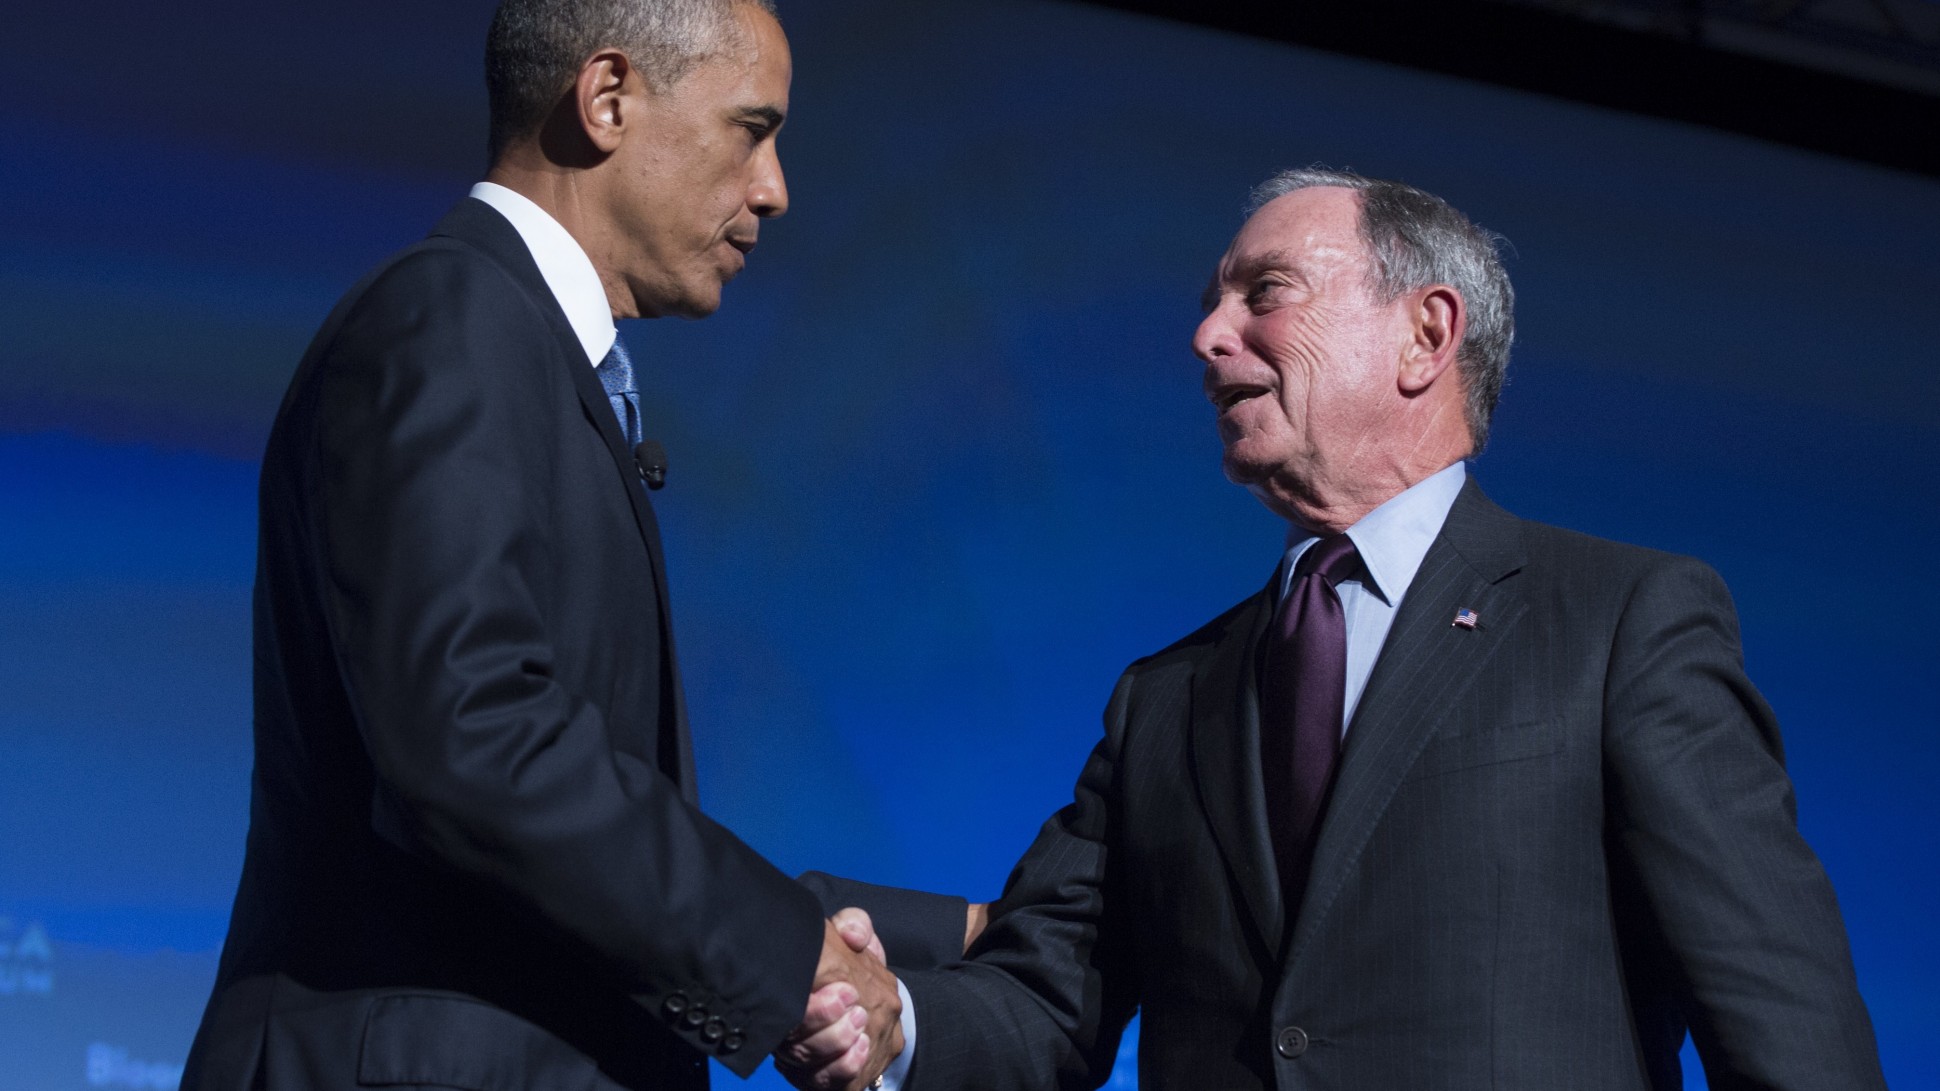 Image: Investigate Mike Bloomberg for “bribery and vote buying,” says Matt Gaetz